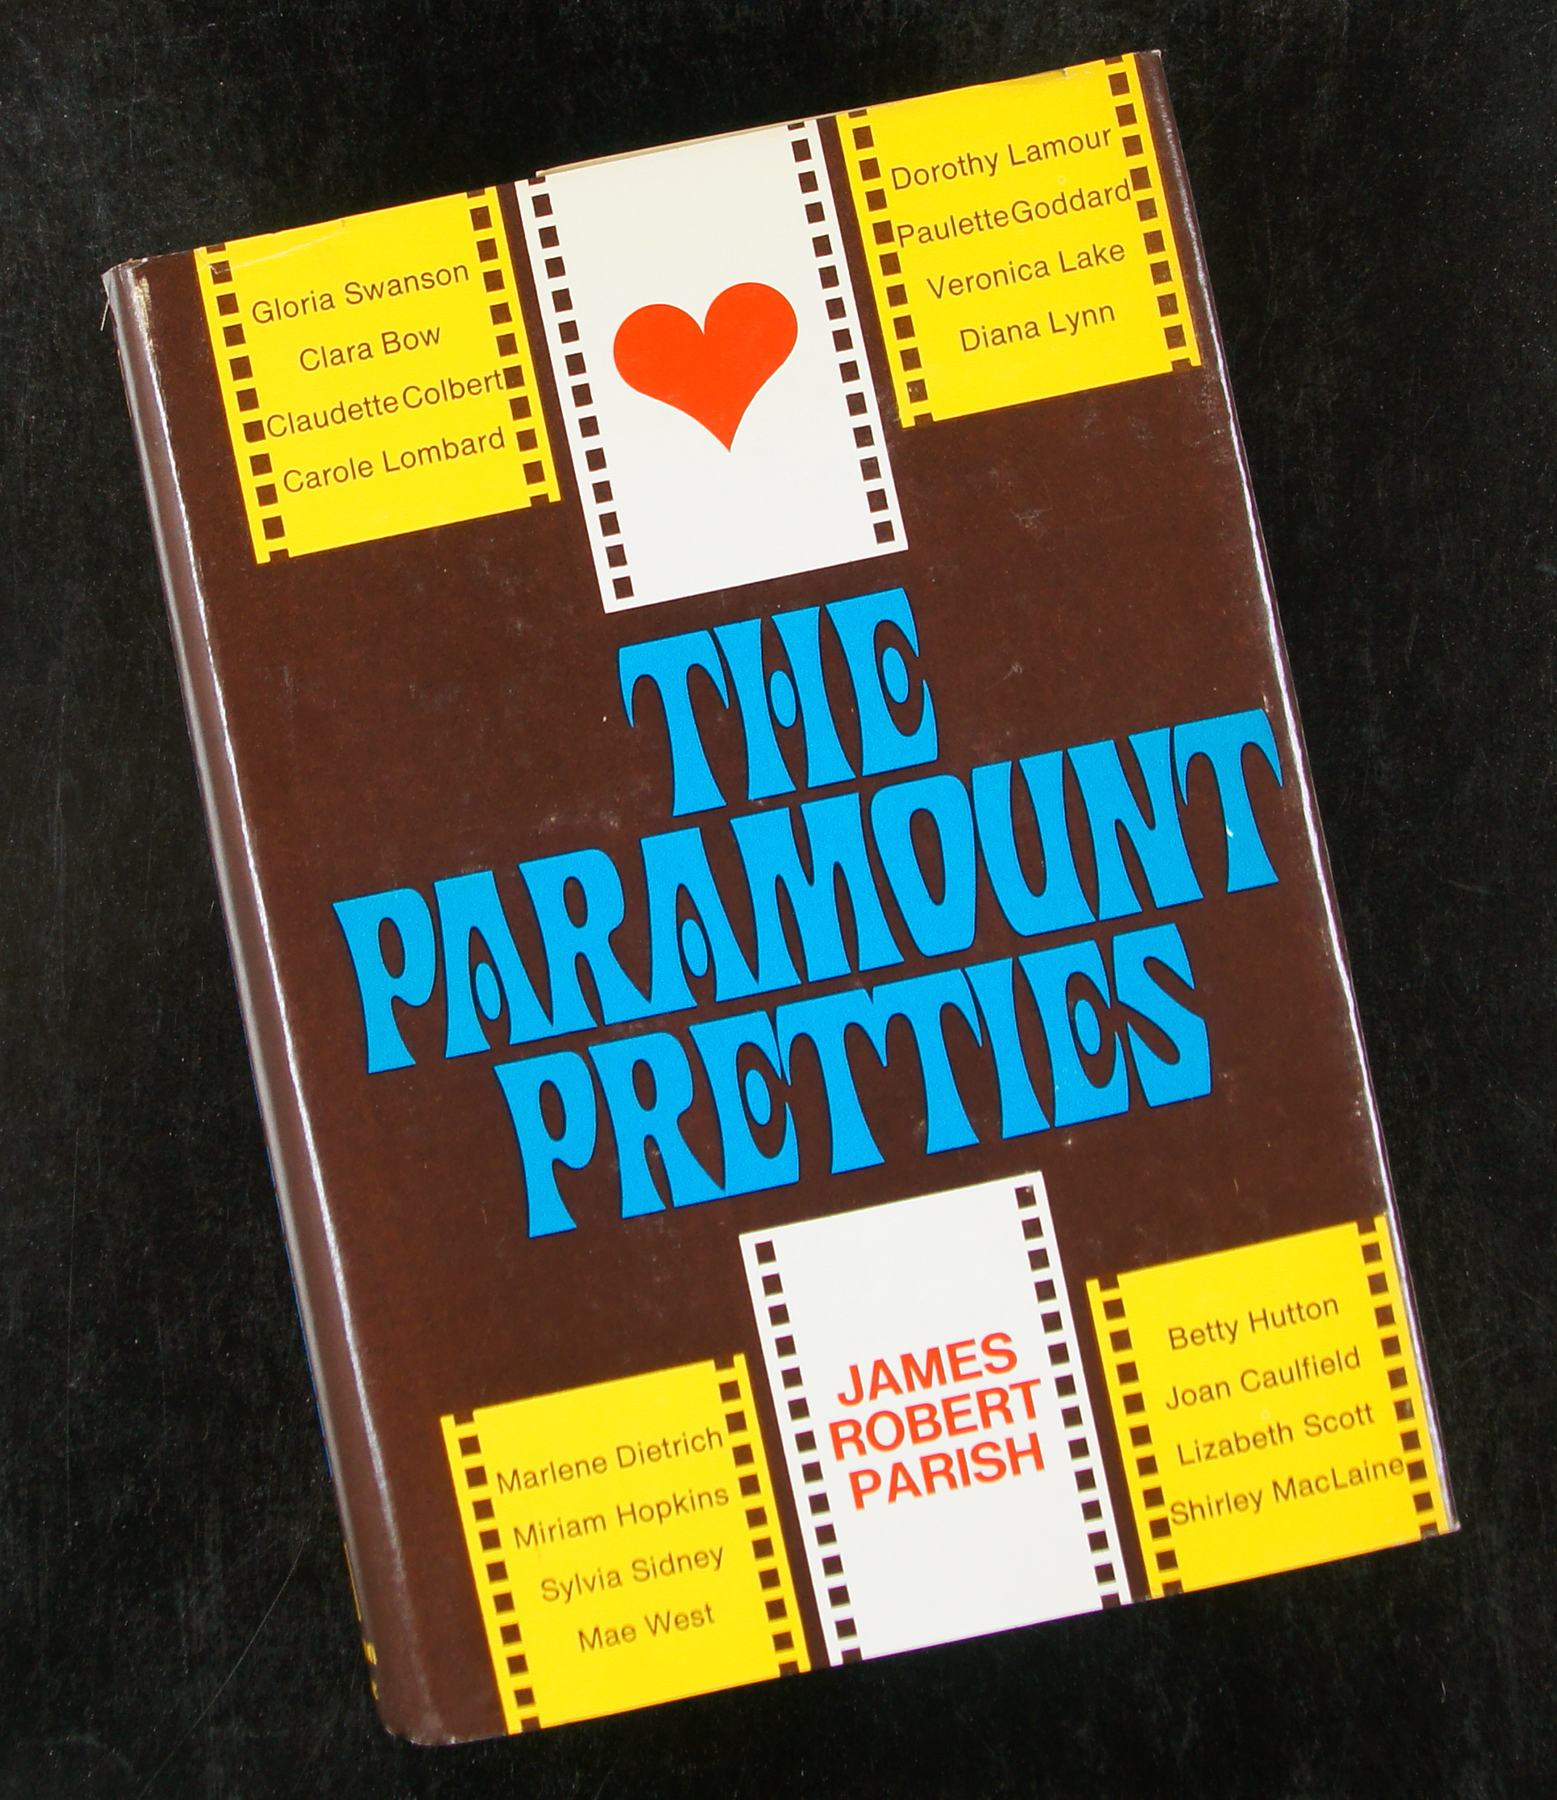 The Paramount Pretties - James Robert Parish